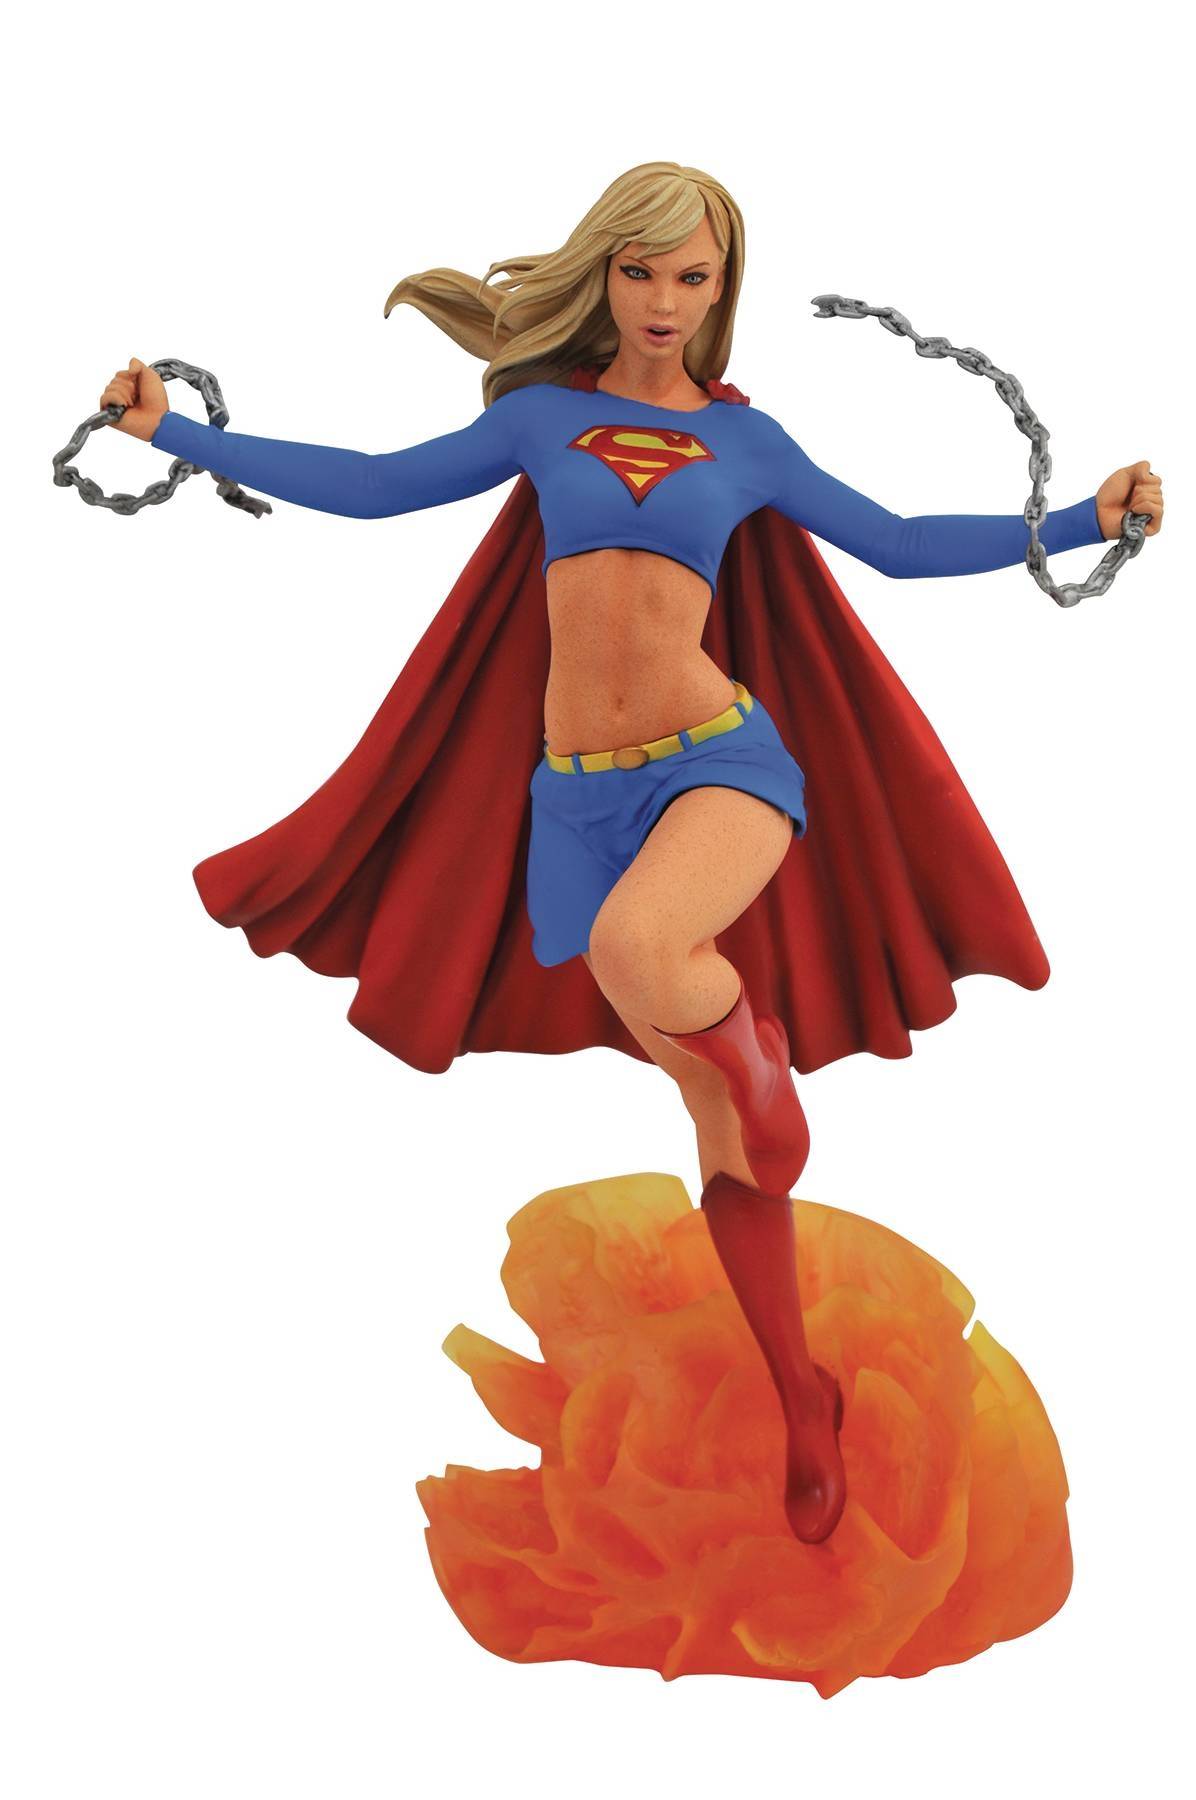 DC GALLERY SUPERGIRL COMIC PVC FIGURE (C: 1-1-2) | L.A. Mood Comics and Games